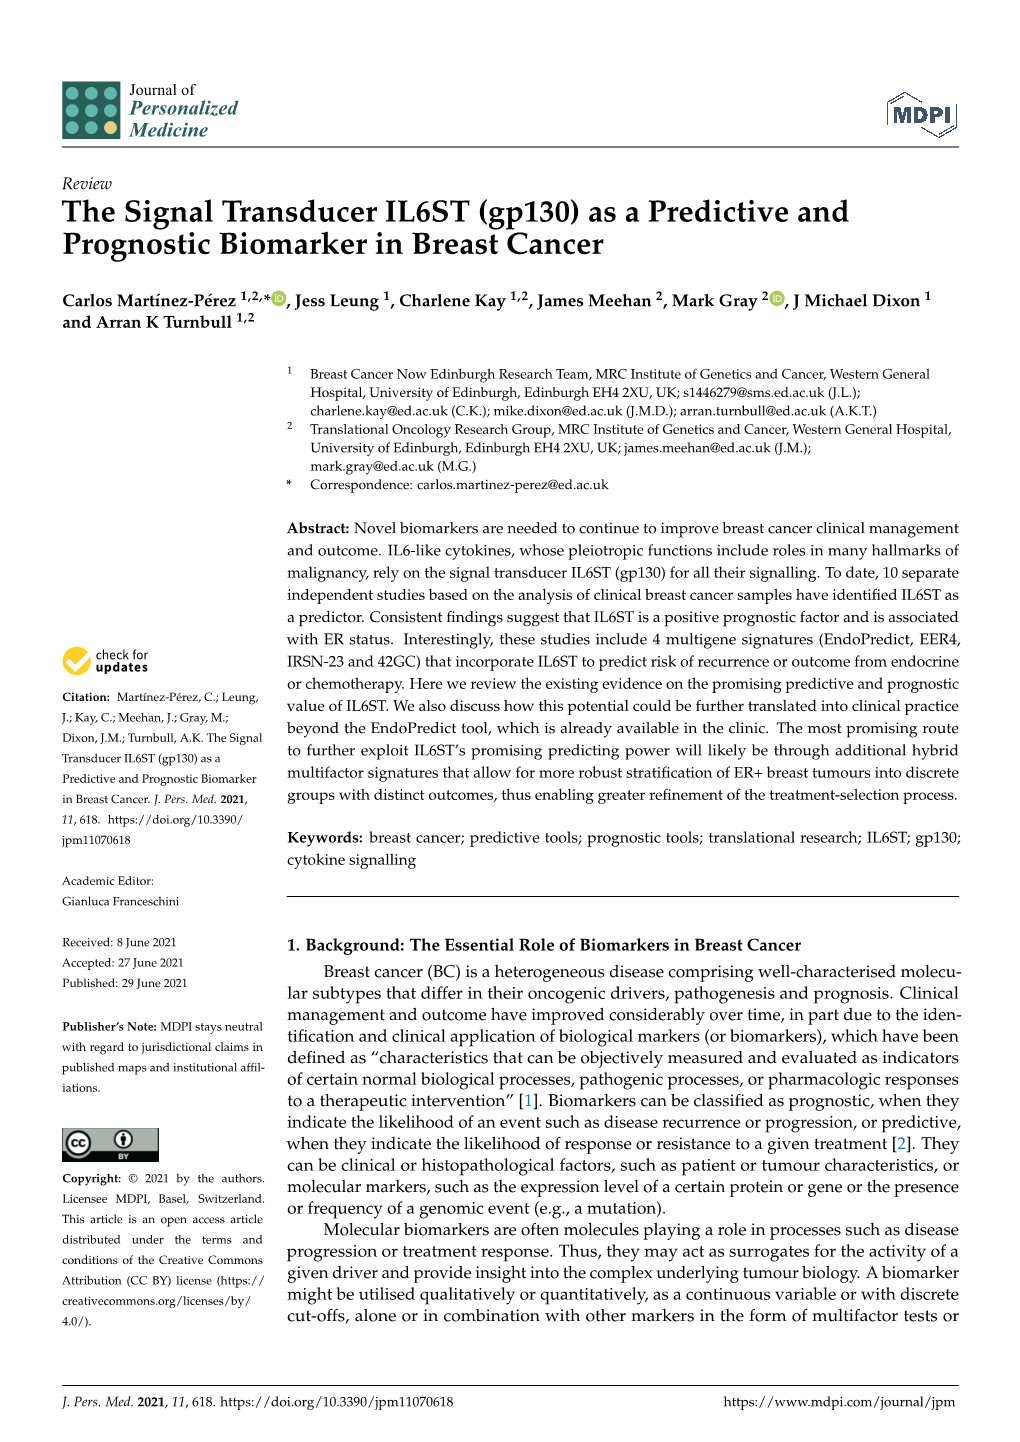 The Signal Transducer IL6ST (Gp130) As a Predictive and Prognostic Biomarker in Breast Cancer